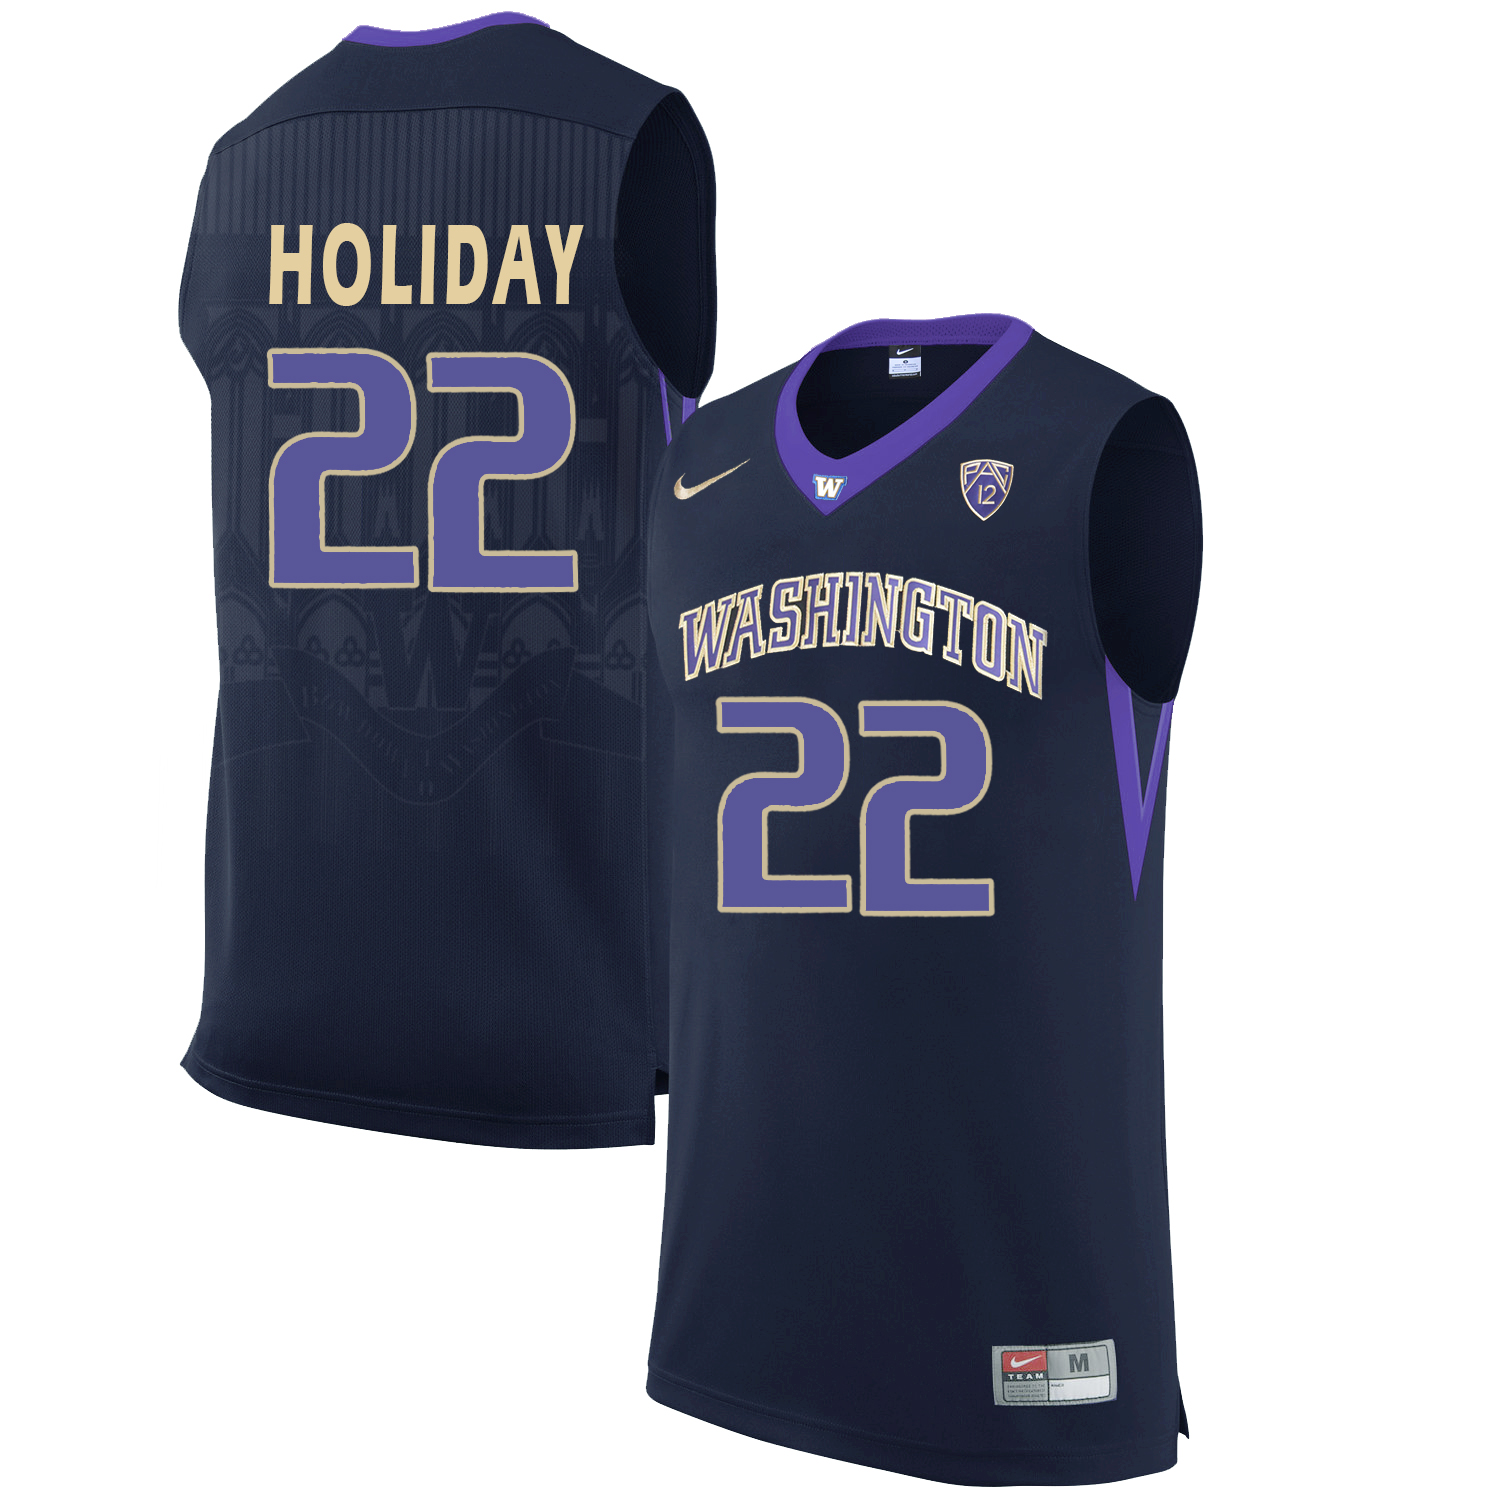 Washington Huskies 22 Justin Holiday Black College Basketball Jersey